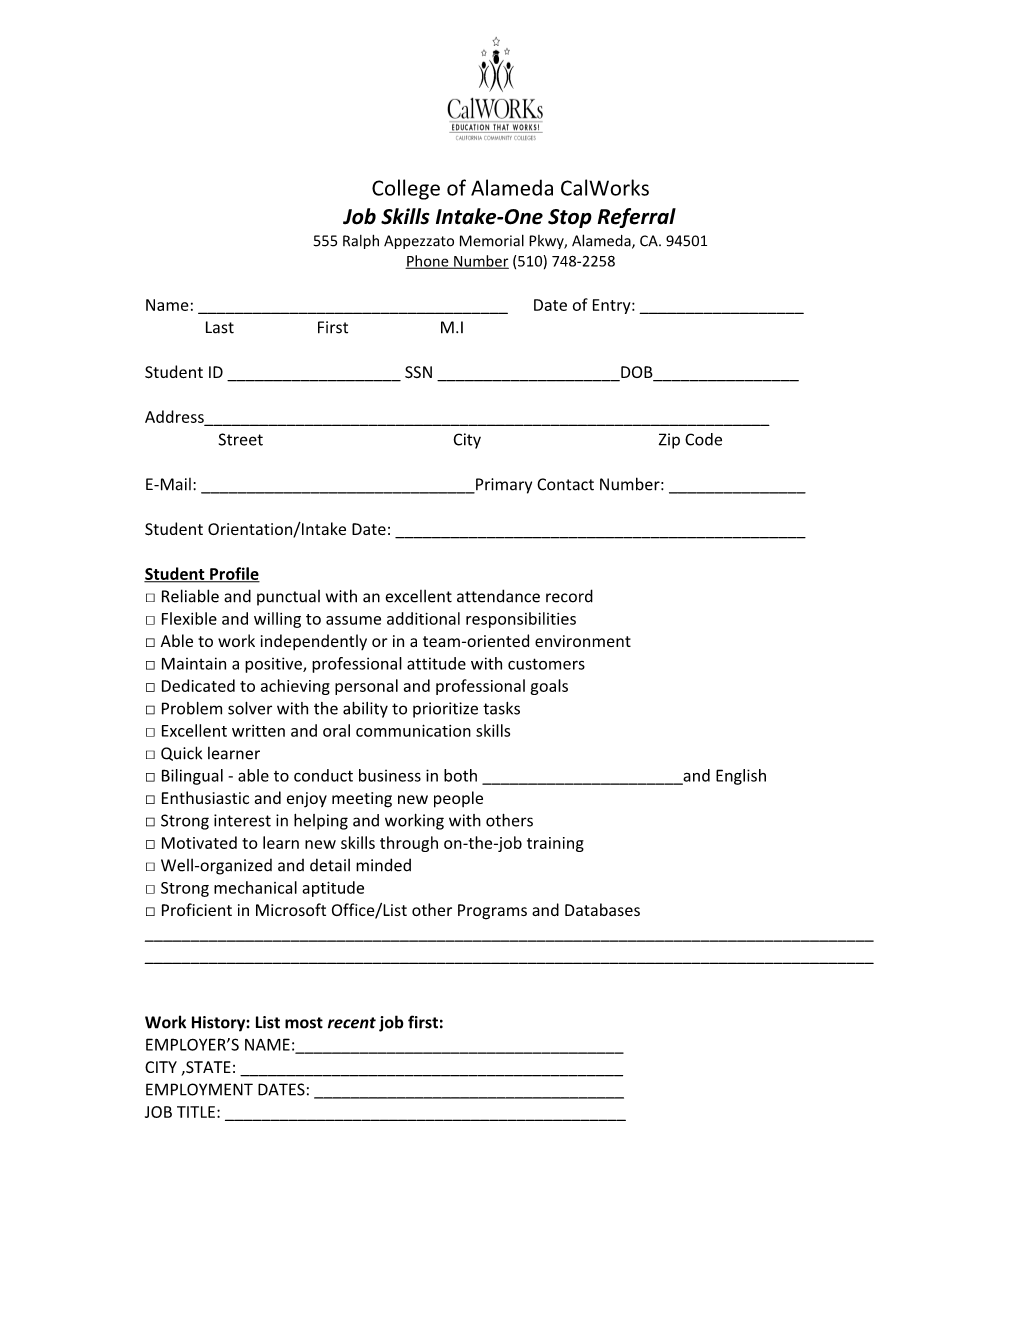 College of Alameda Cal Works Program Intake Sheet